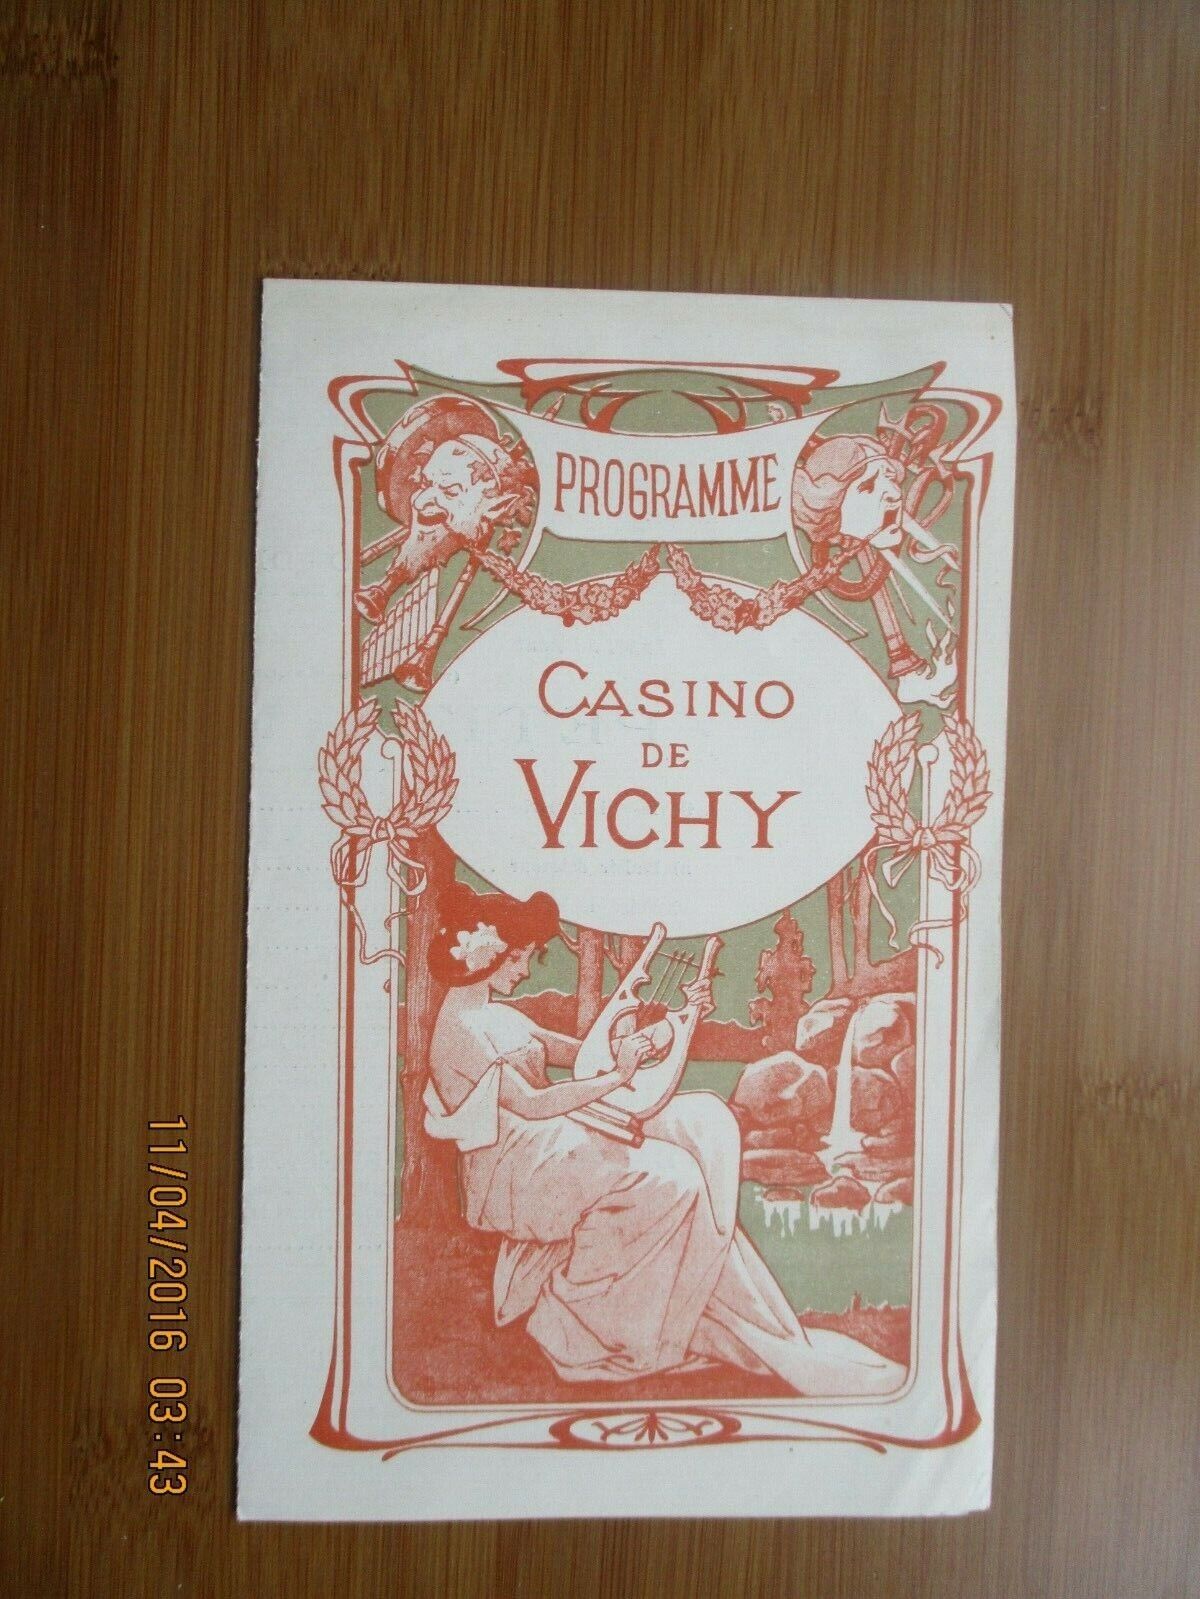 c 1920s CASINO DE VICHY PETITE MATINEE CONCERT PROGRAMME GREAT COVER ART